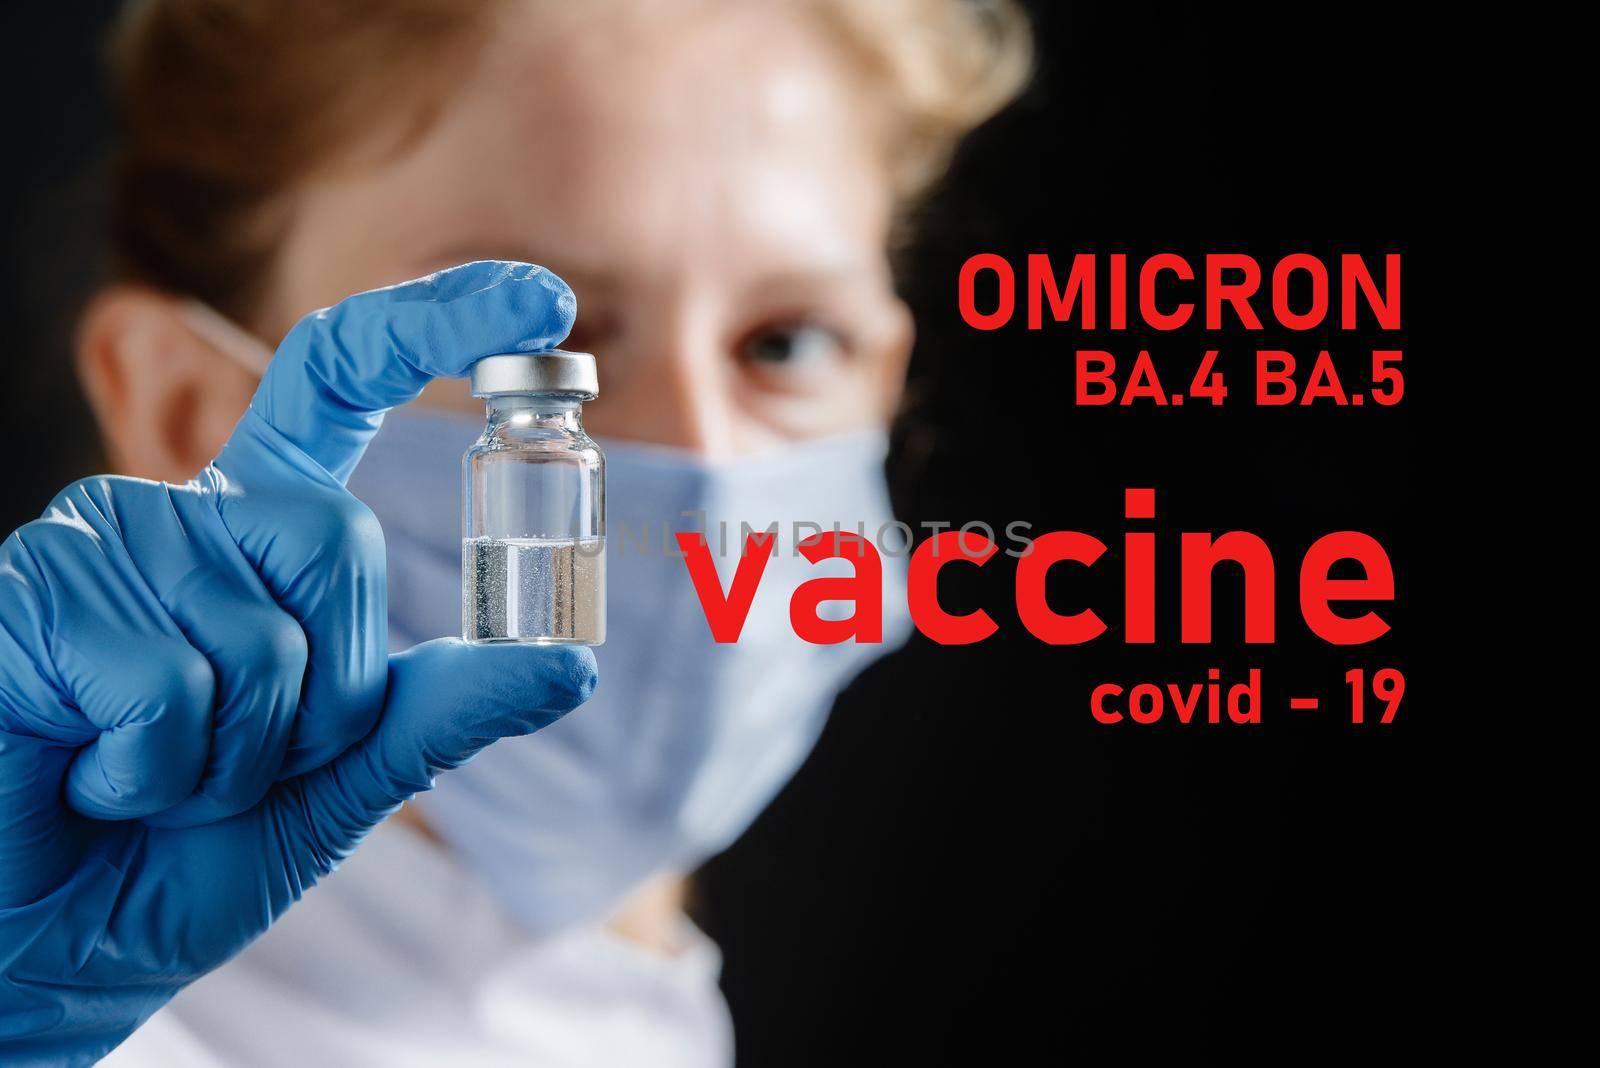 A female doctor wearing a protective mask holds a ba.5 and ba.4 omicron vaccine. Omicron BA.4 BA.5 . Covid 19 alpha, beta, gamma, delta, lambda, mu, omicron variants.